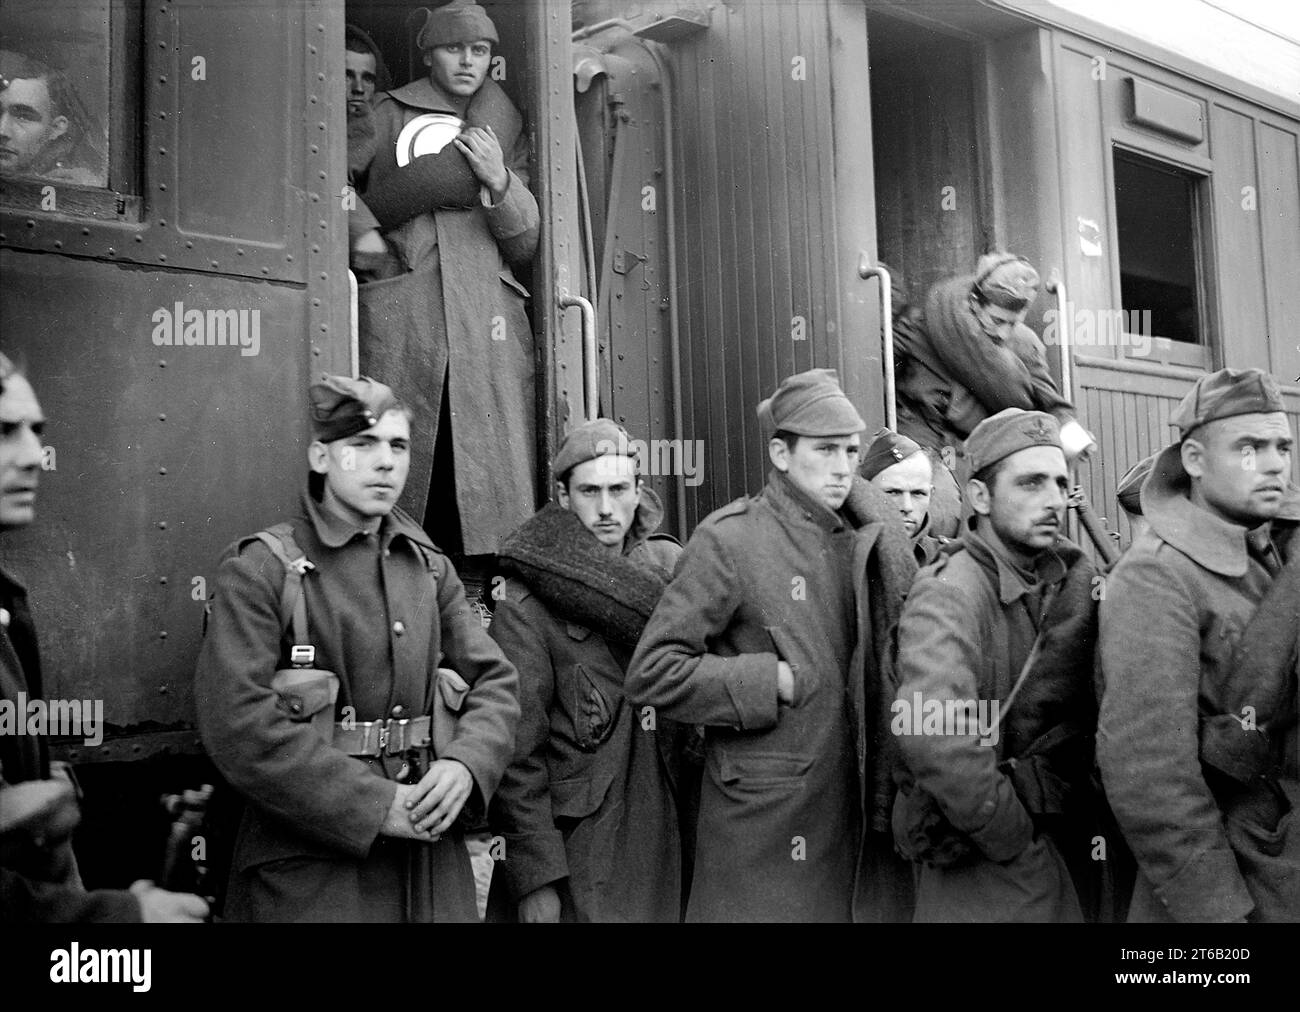 Italian prisoners of war detraining at Wadi al-Sarar Railway Station, Mandatory Palestine, G. Eric and Edith Matson Photograph Collection, December 21, 1940 Stock Photo